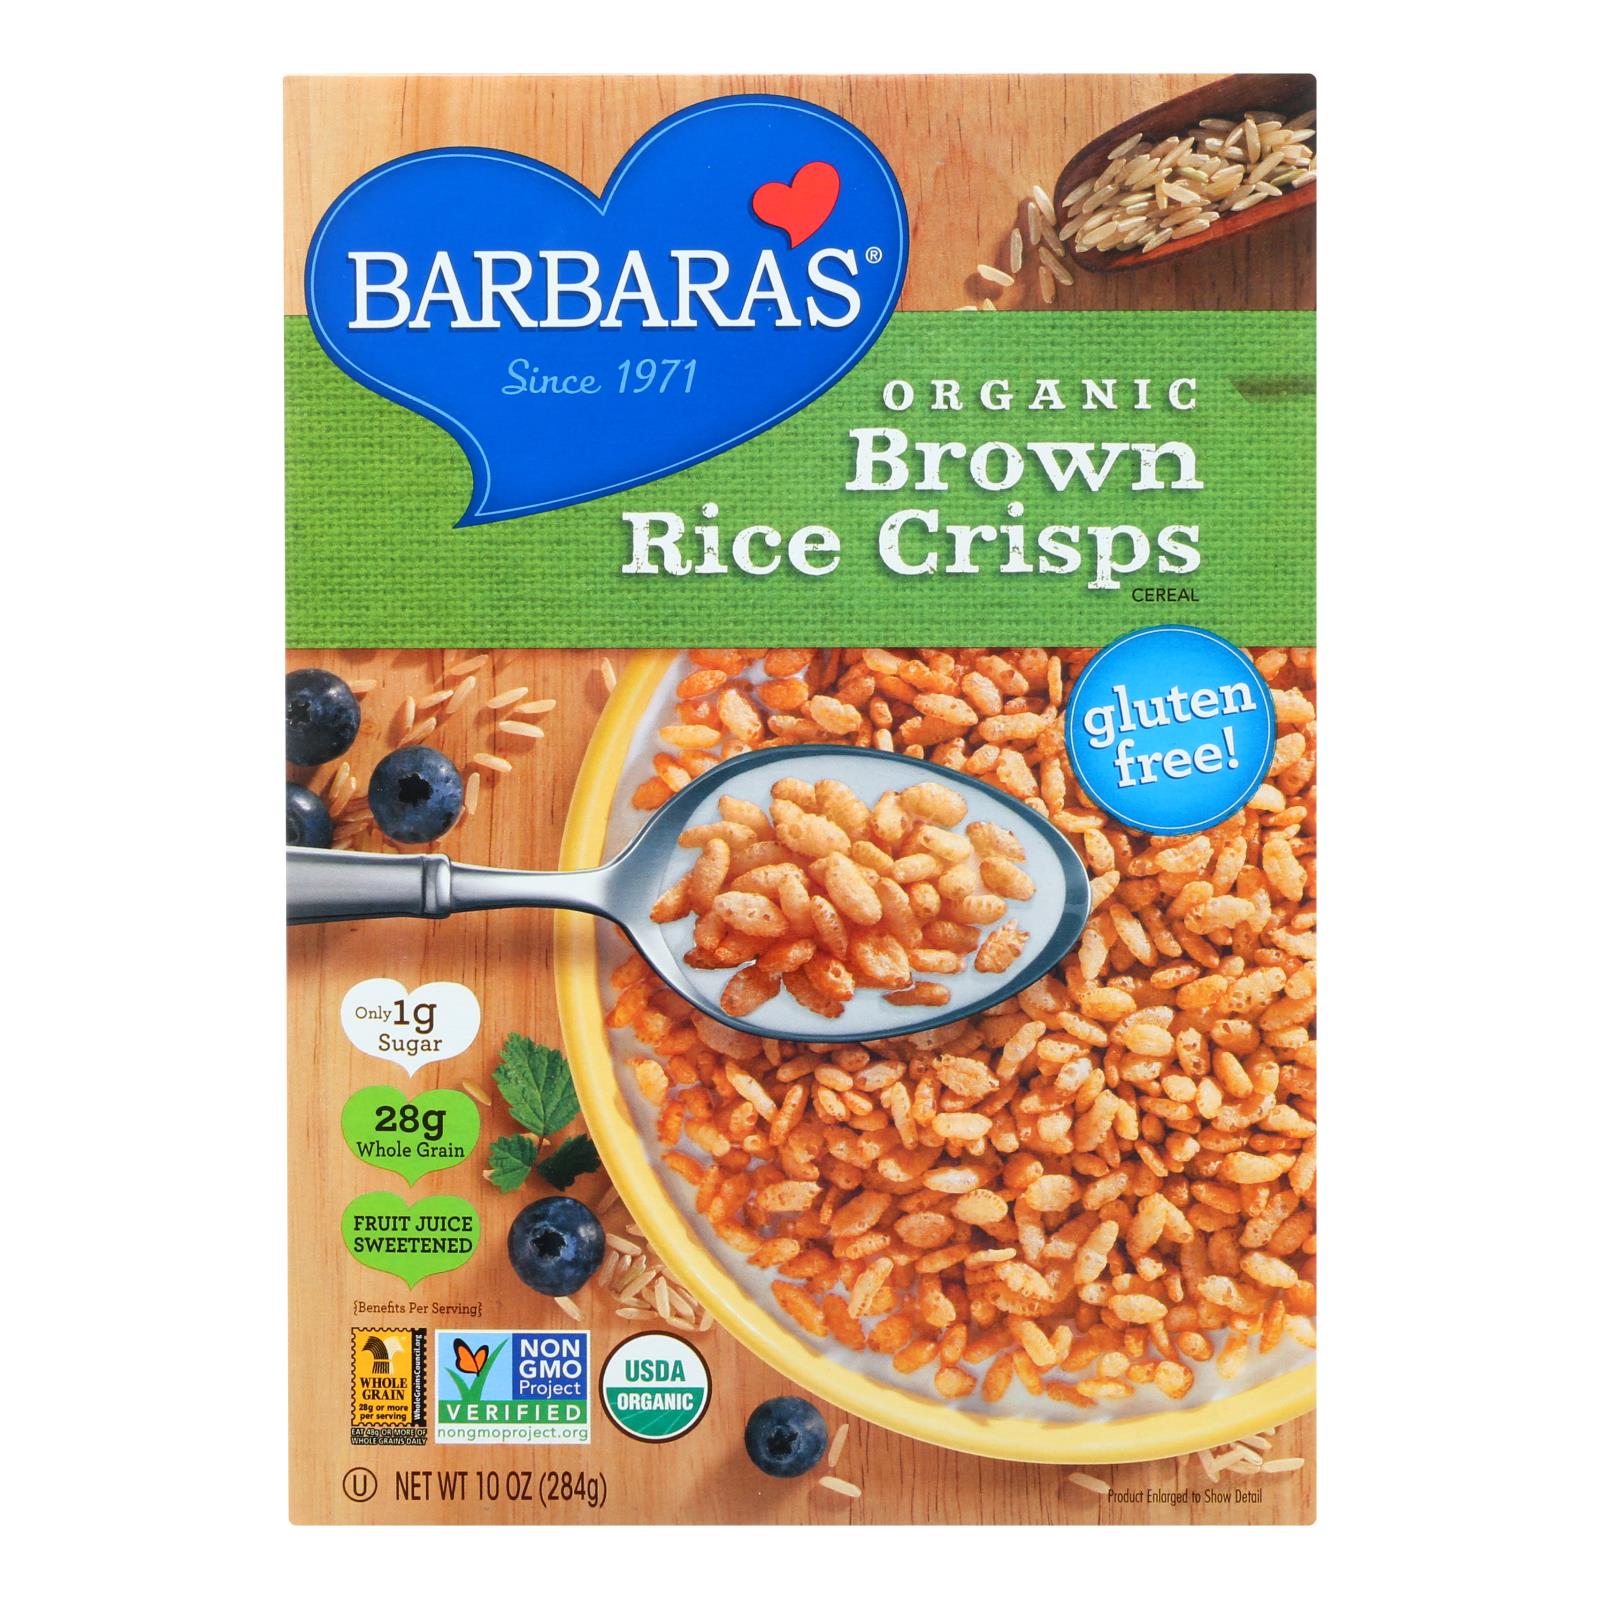 Barbara's Organic Brown Rice Crisps Cereal, Gluten-Free - 10개 묶음상품 - 10 OZ